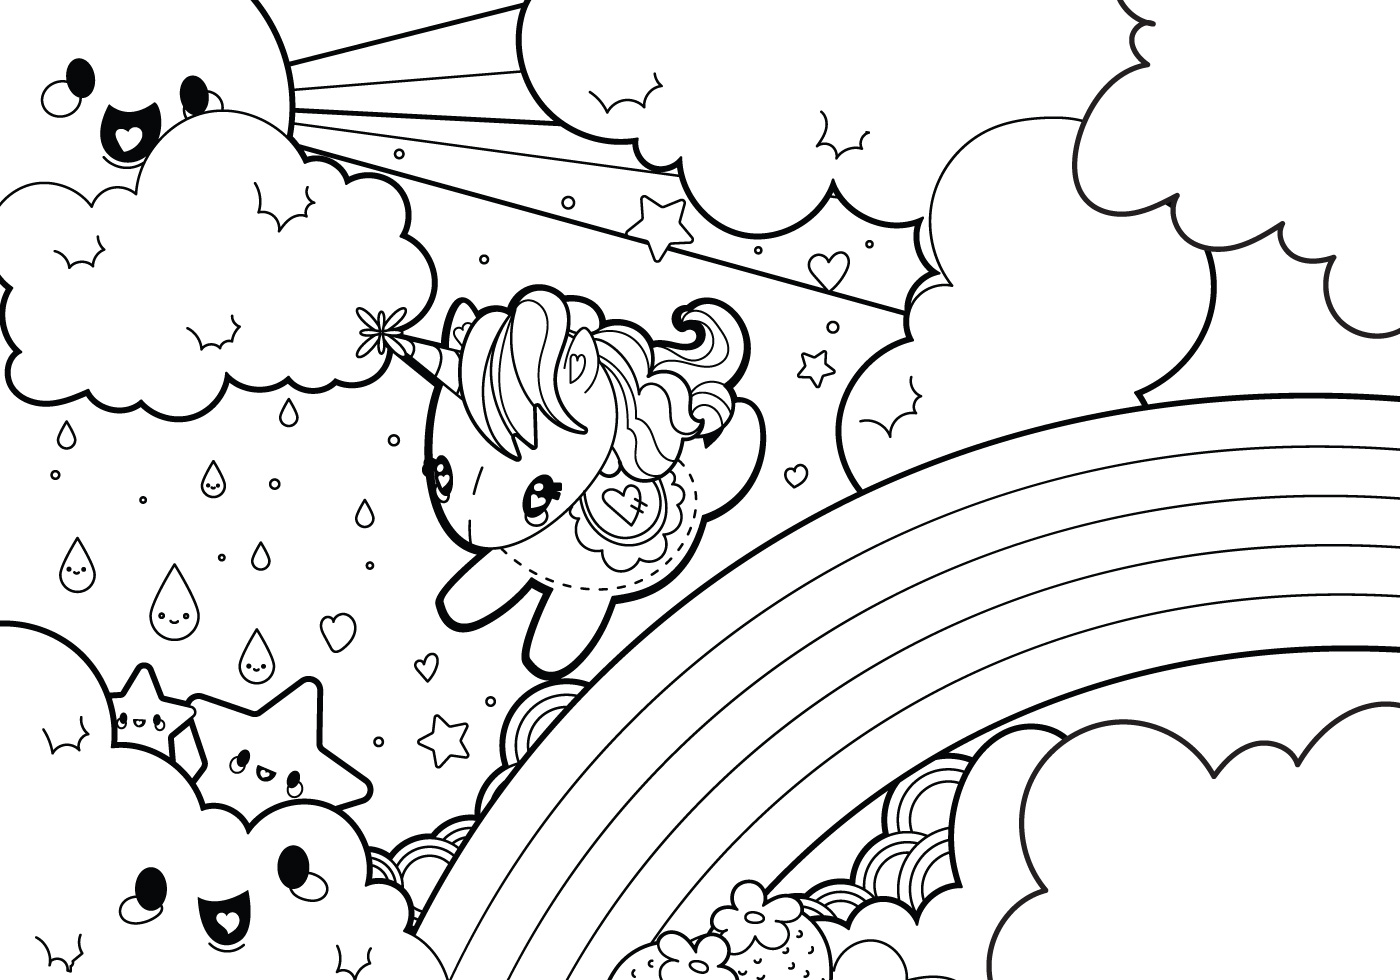 rainy rainbow unicorn scene coloring page 99044 vector art at vecteezy